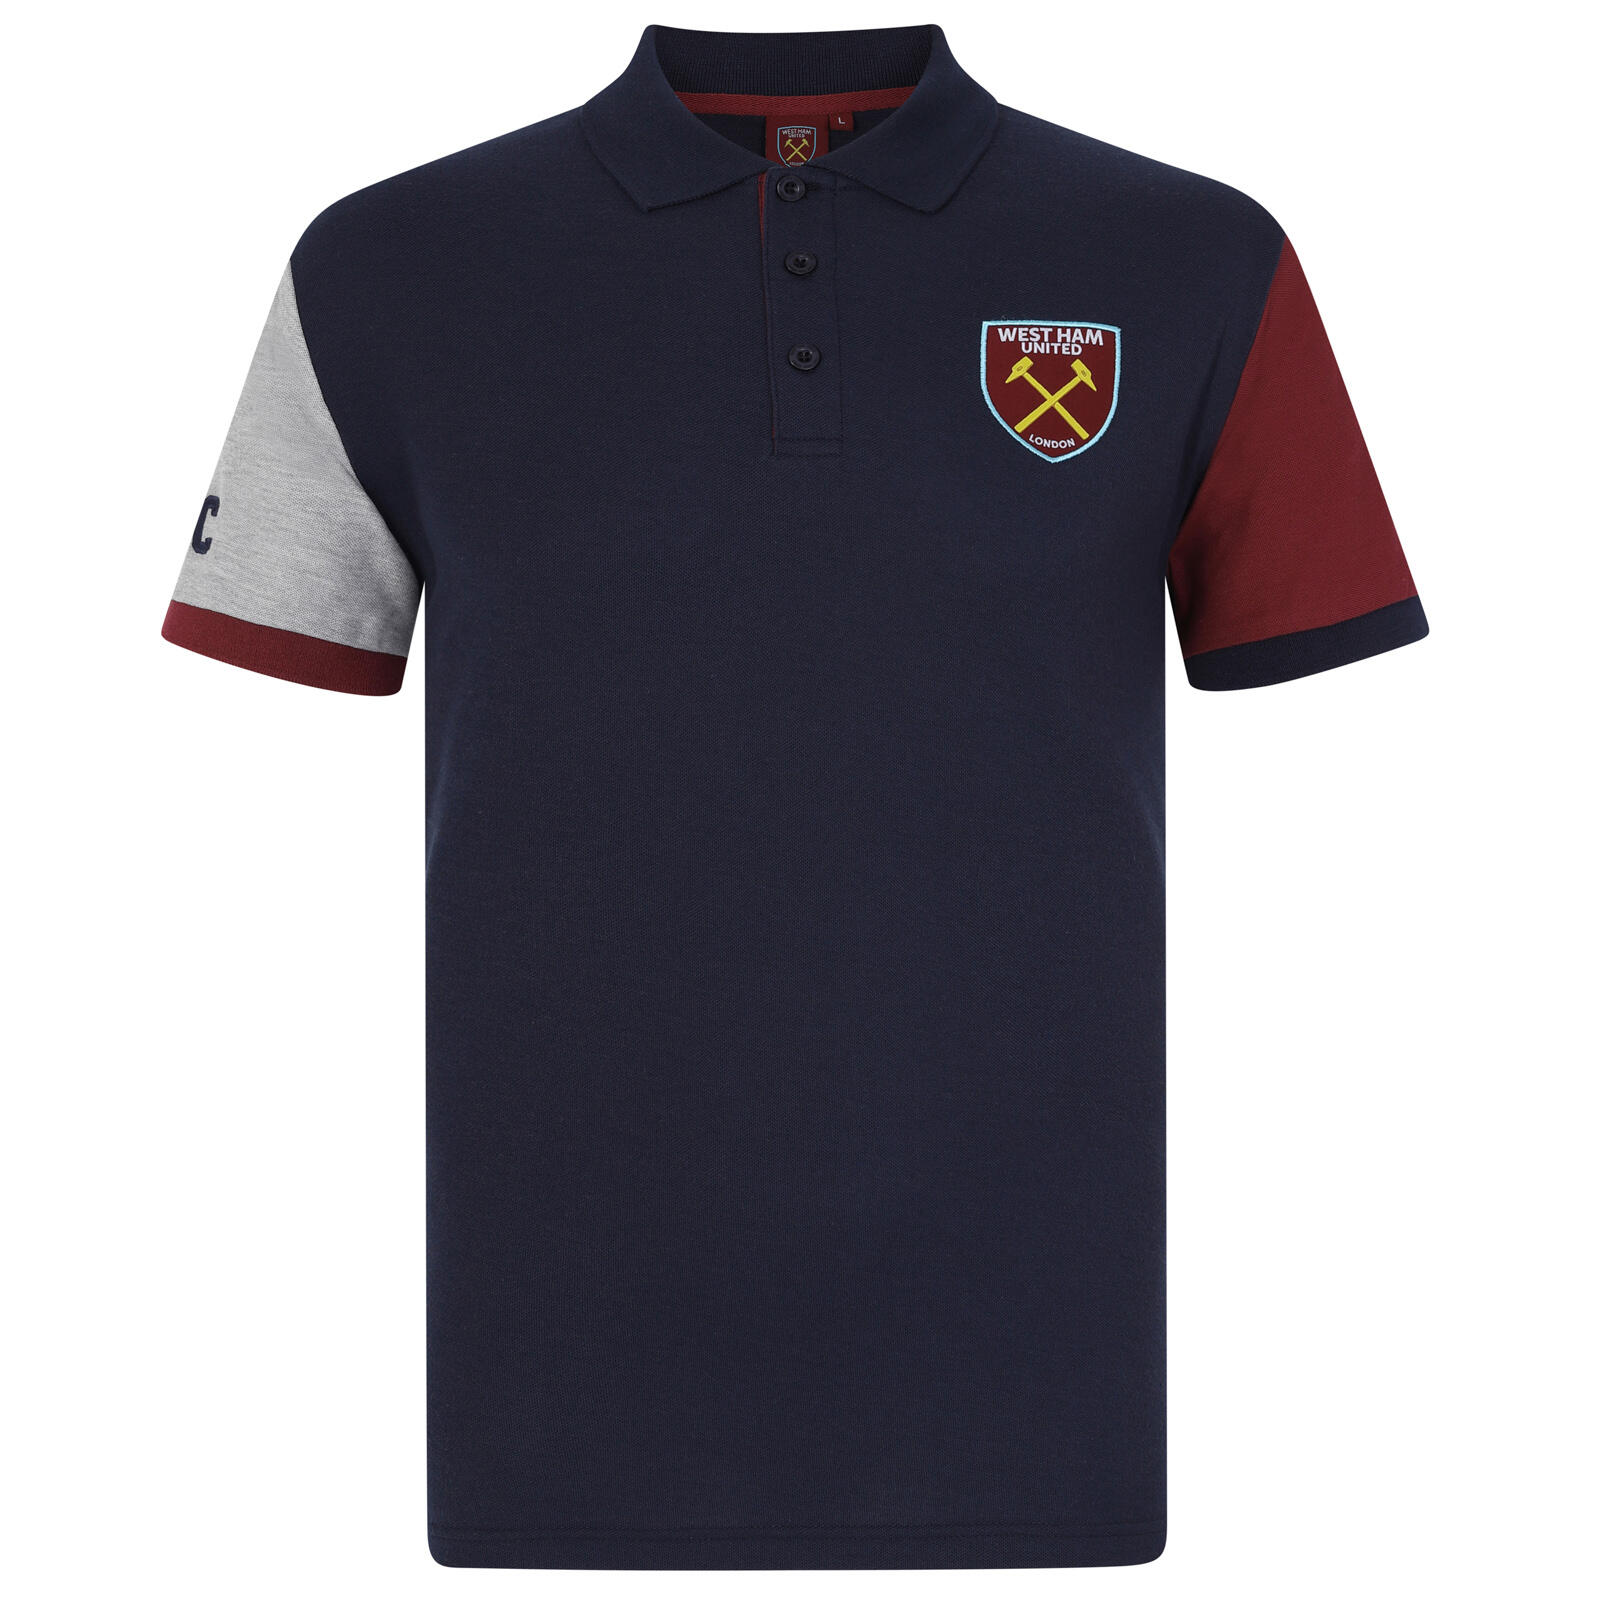 WEST HAM UNITED West Ham United Boys Polo Shirt Crest Kids OFFICIAL Football Gift